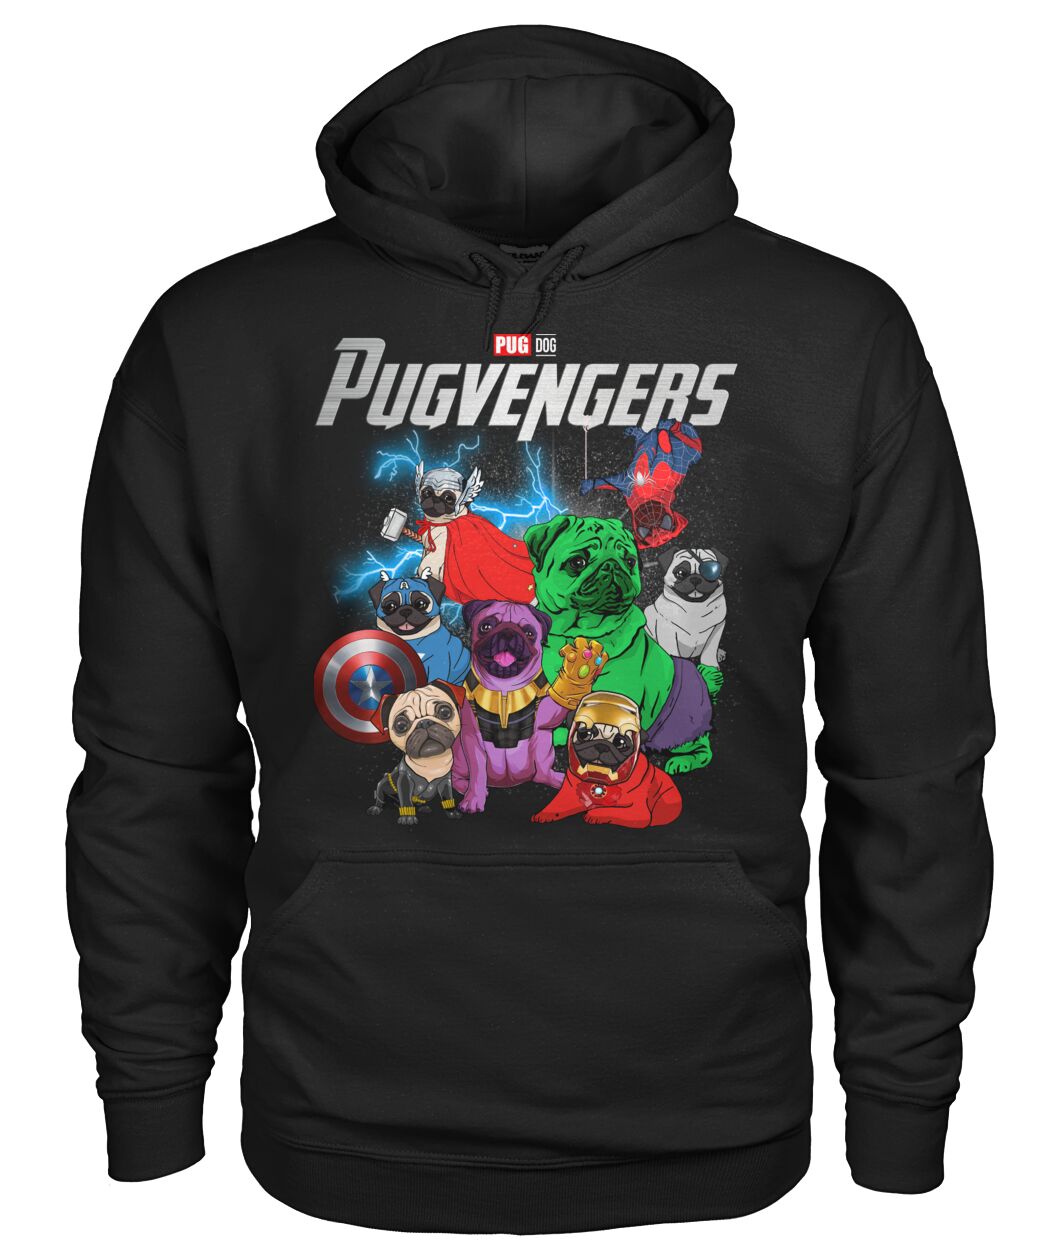 Pug Dog Pugvenger 3D Hoodie, Shirt 8